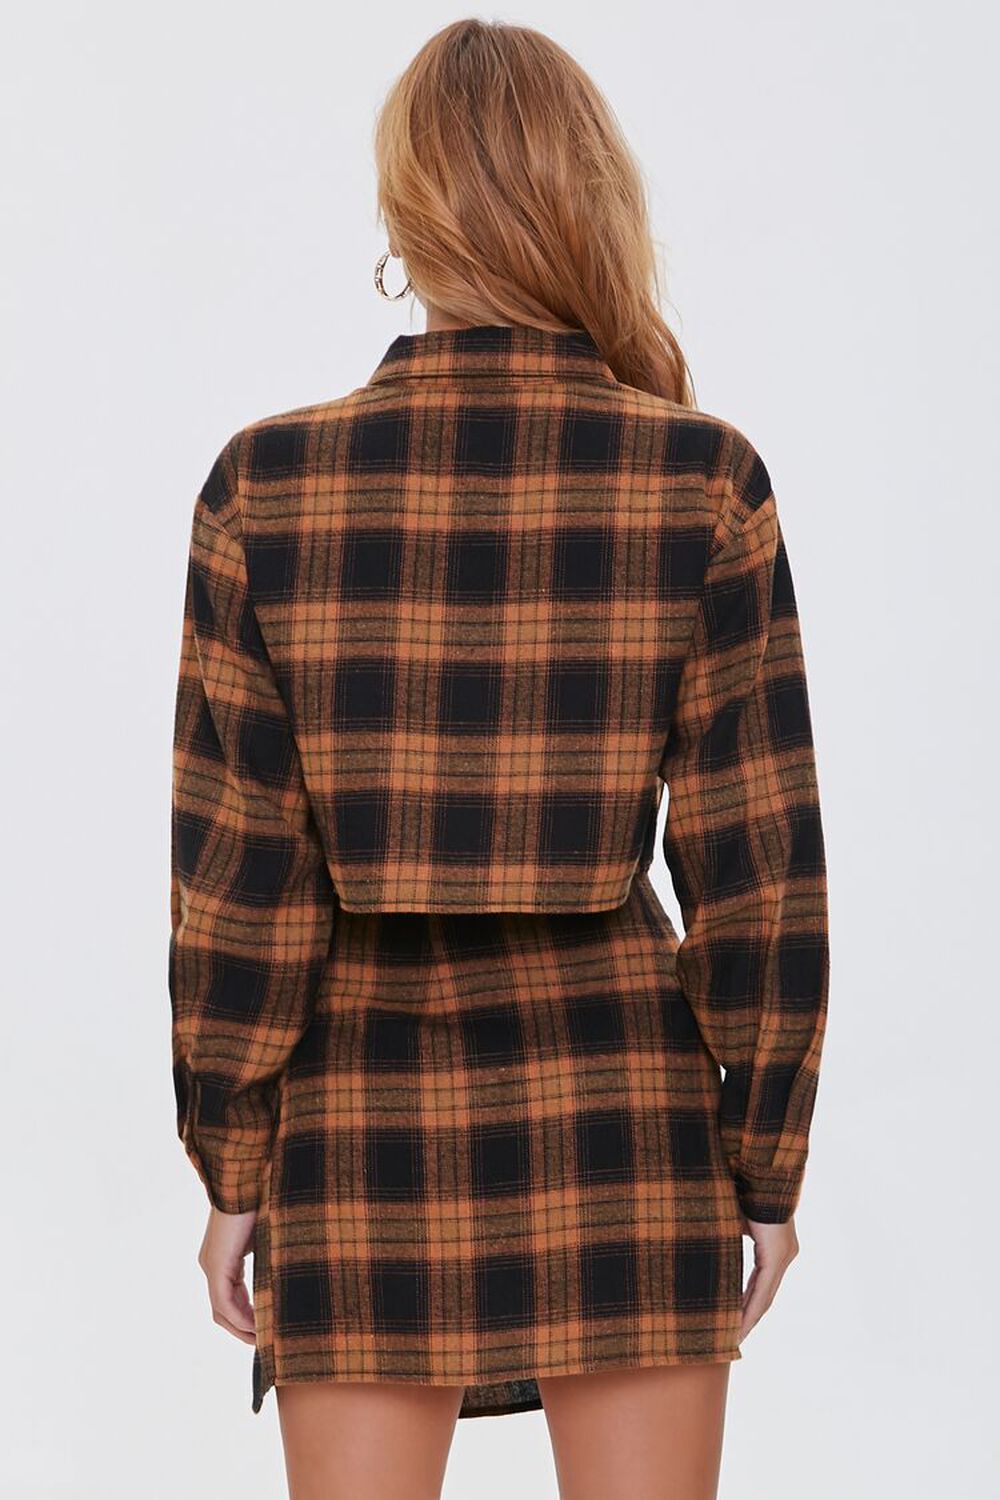 BROWN/BLACK Plaid Shirt & Buttoned Skirt Set, image 3